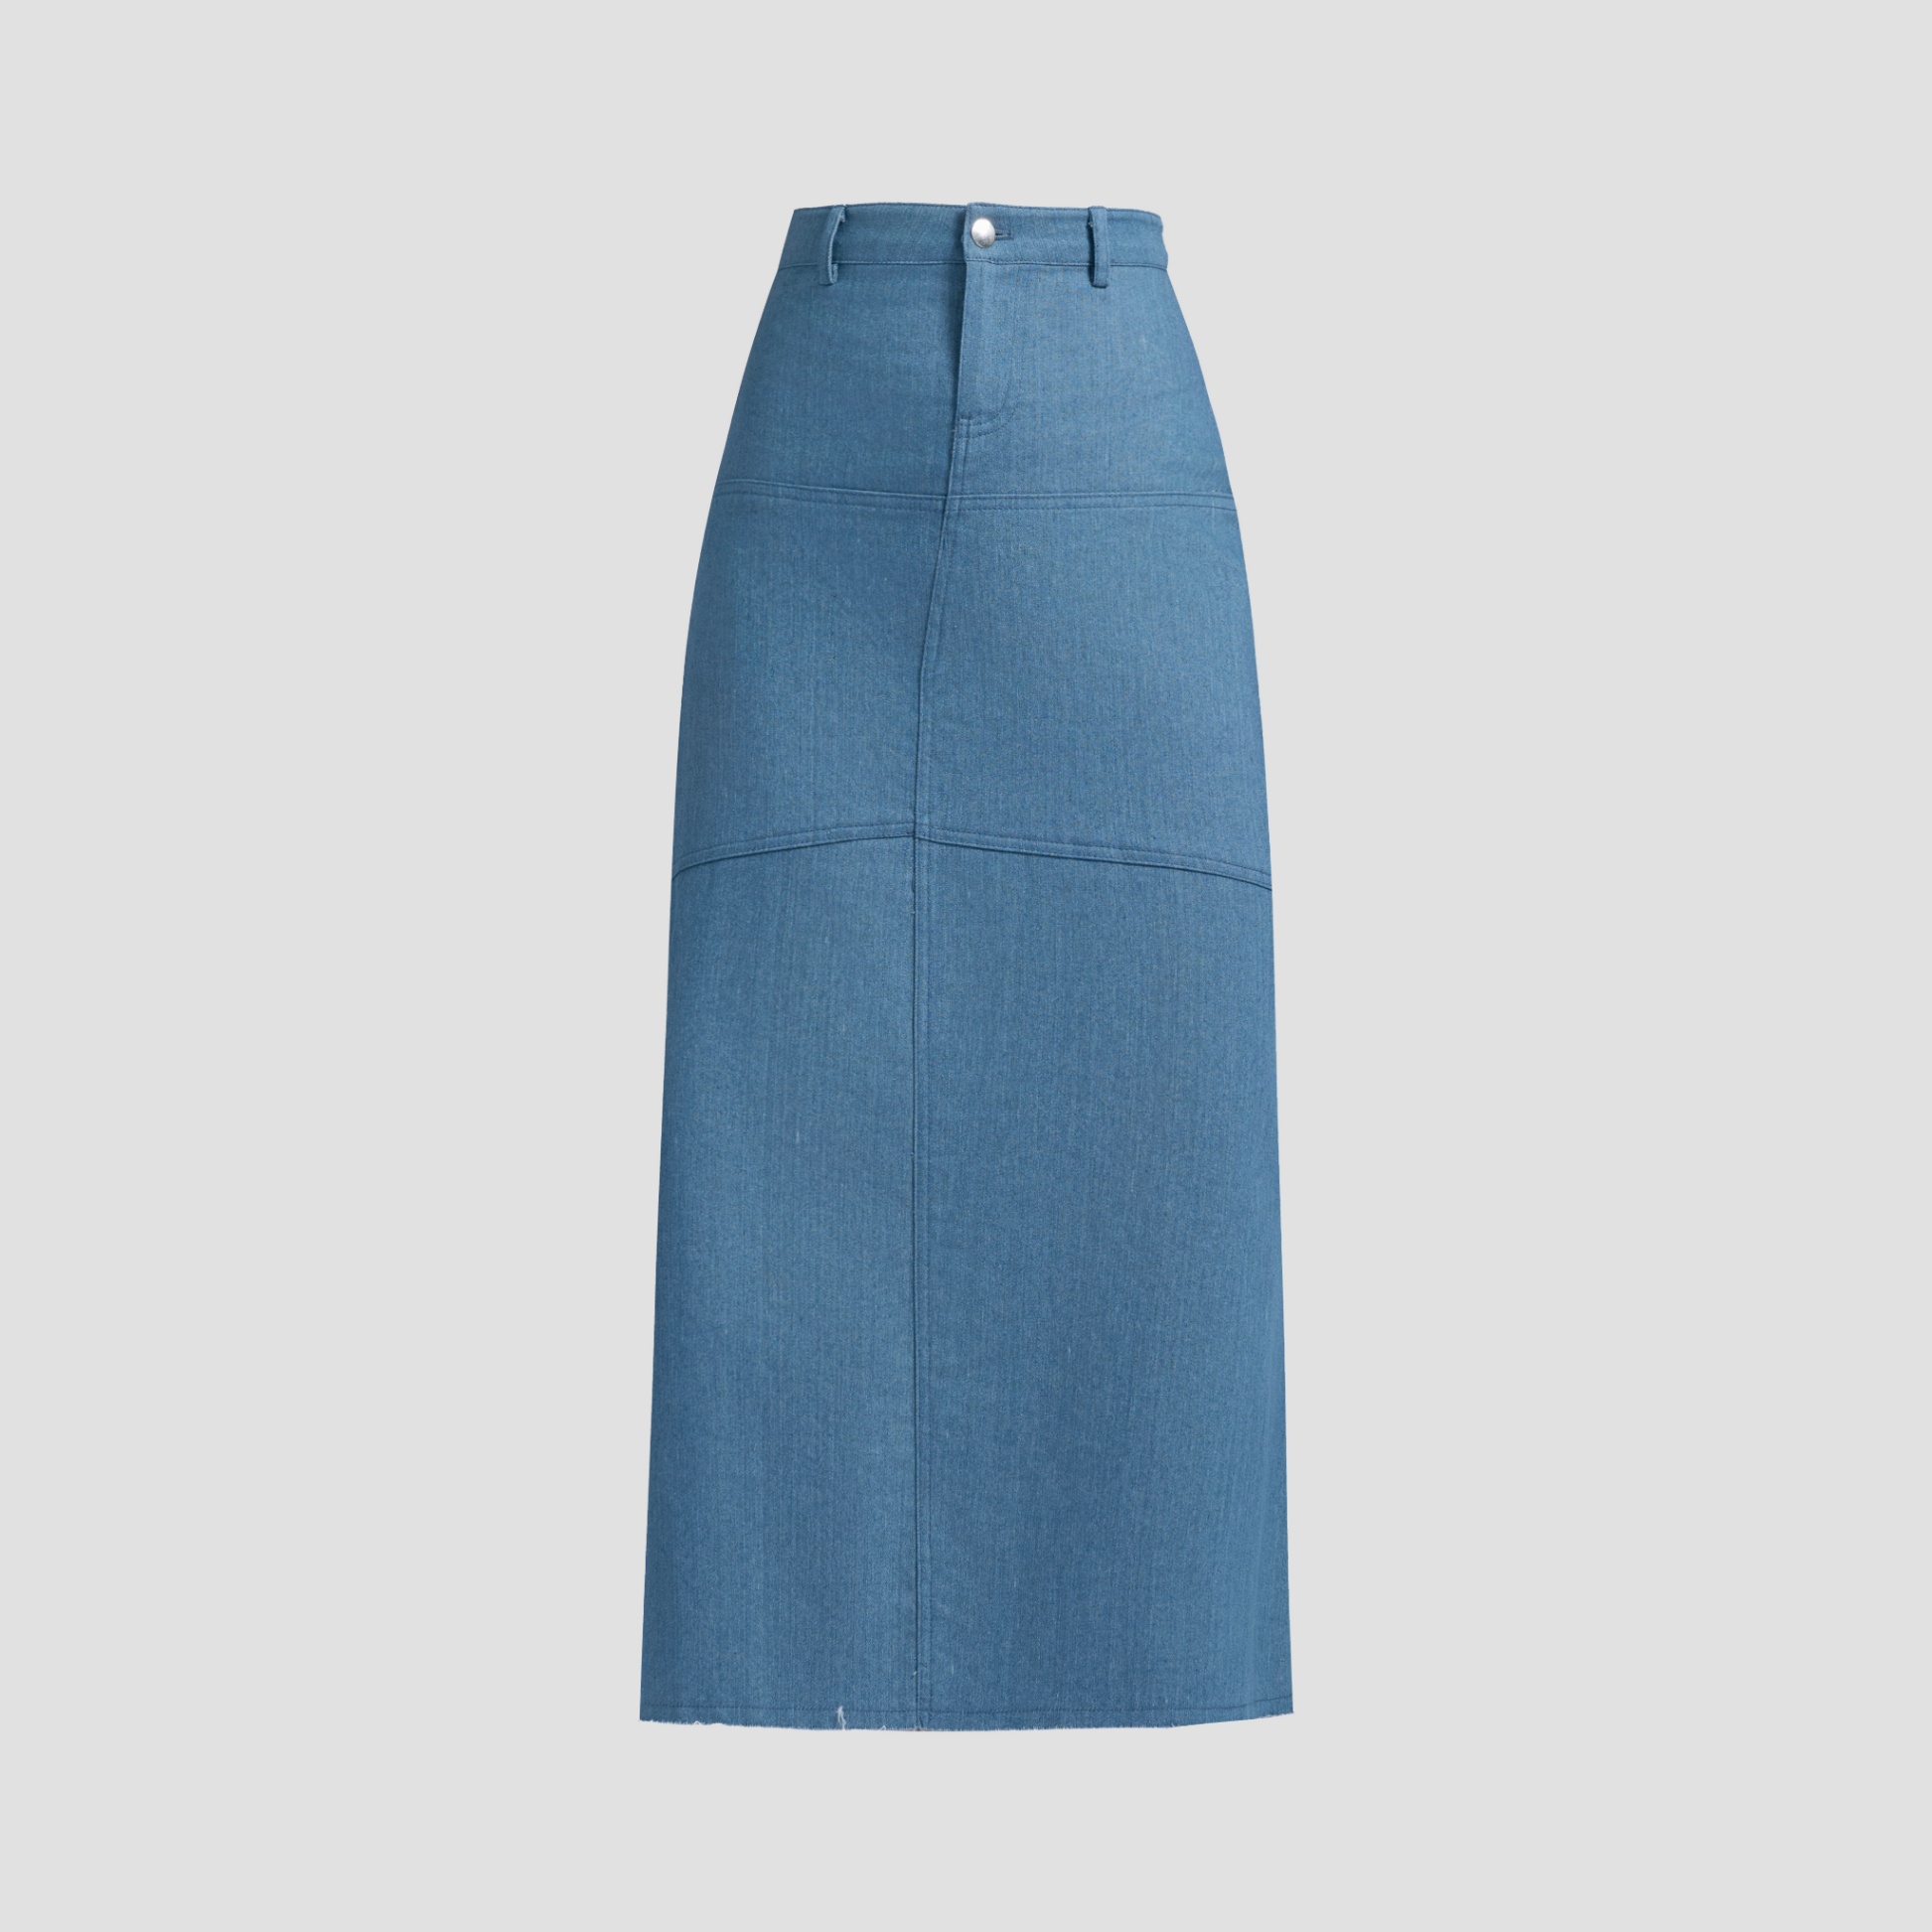 H2T Shop - Chân váy jean chất jean thun co giãn, form ôm... | Facebook